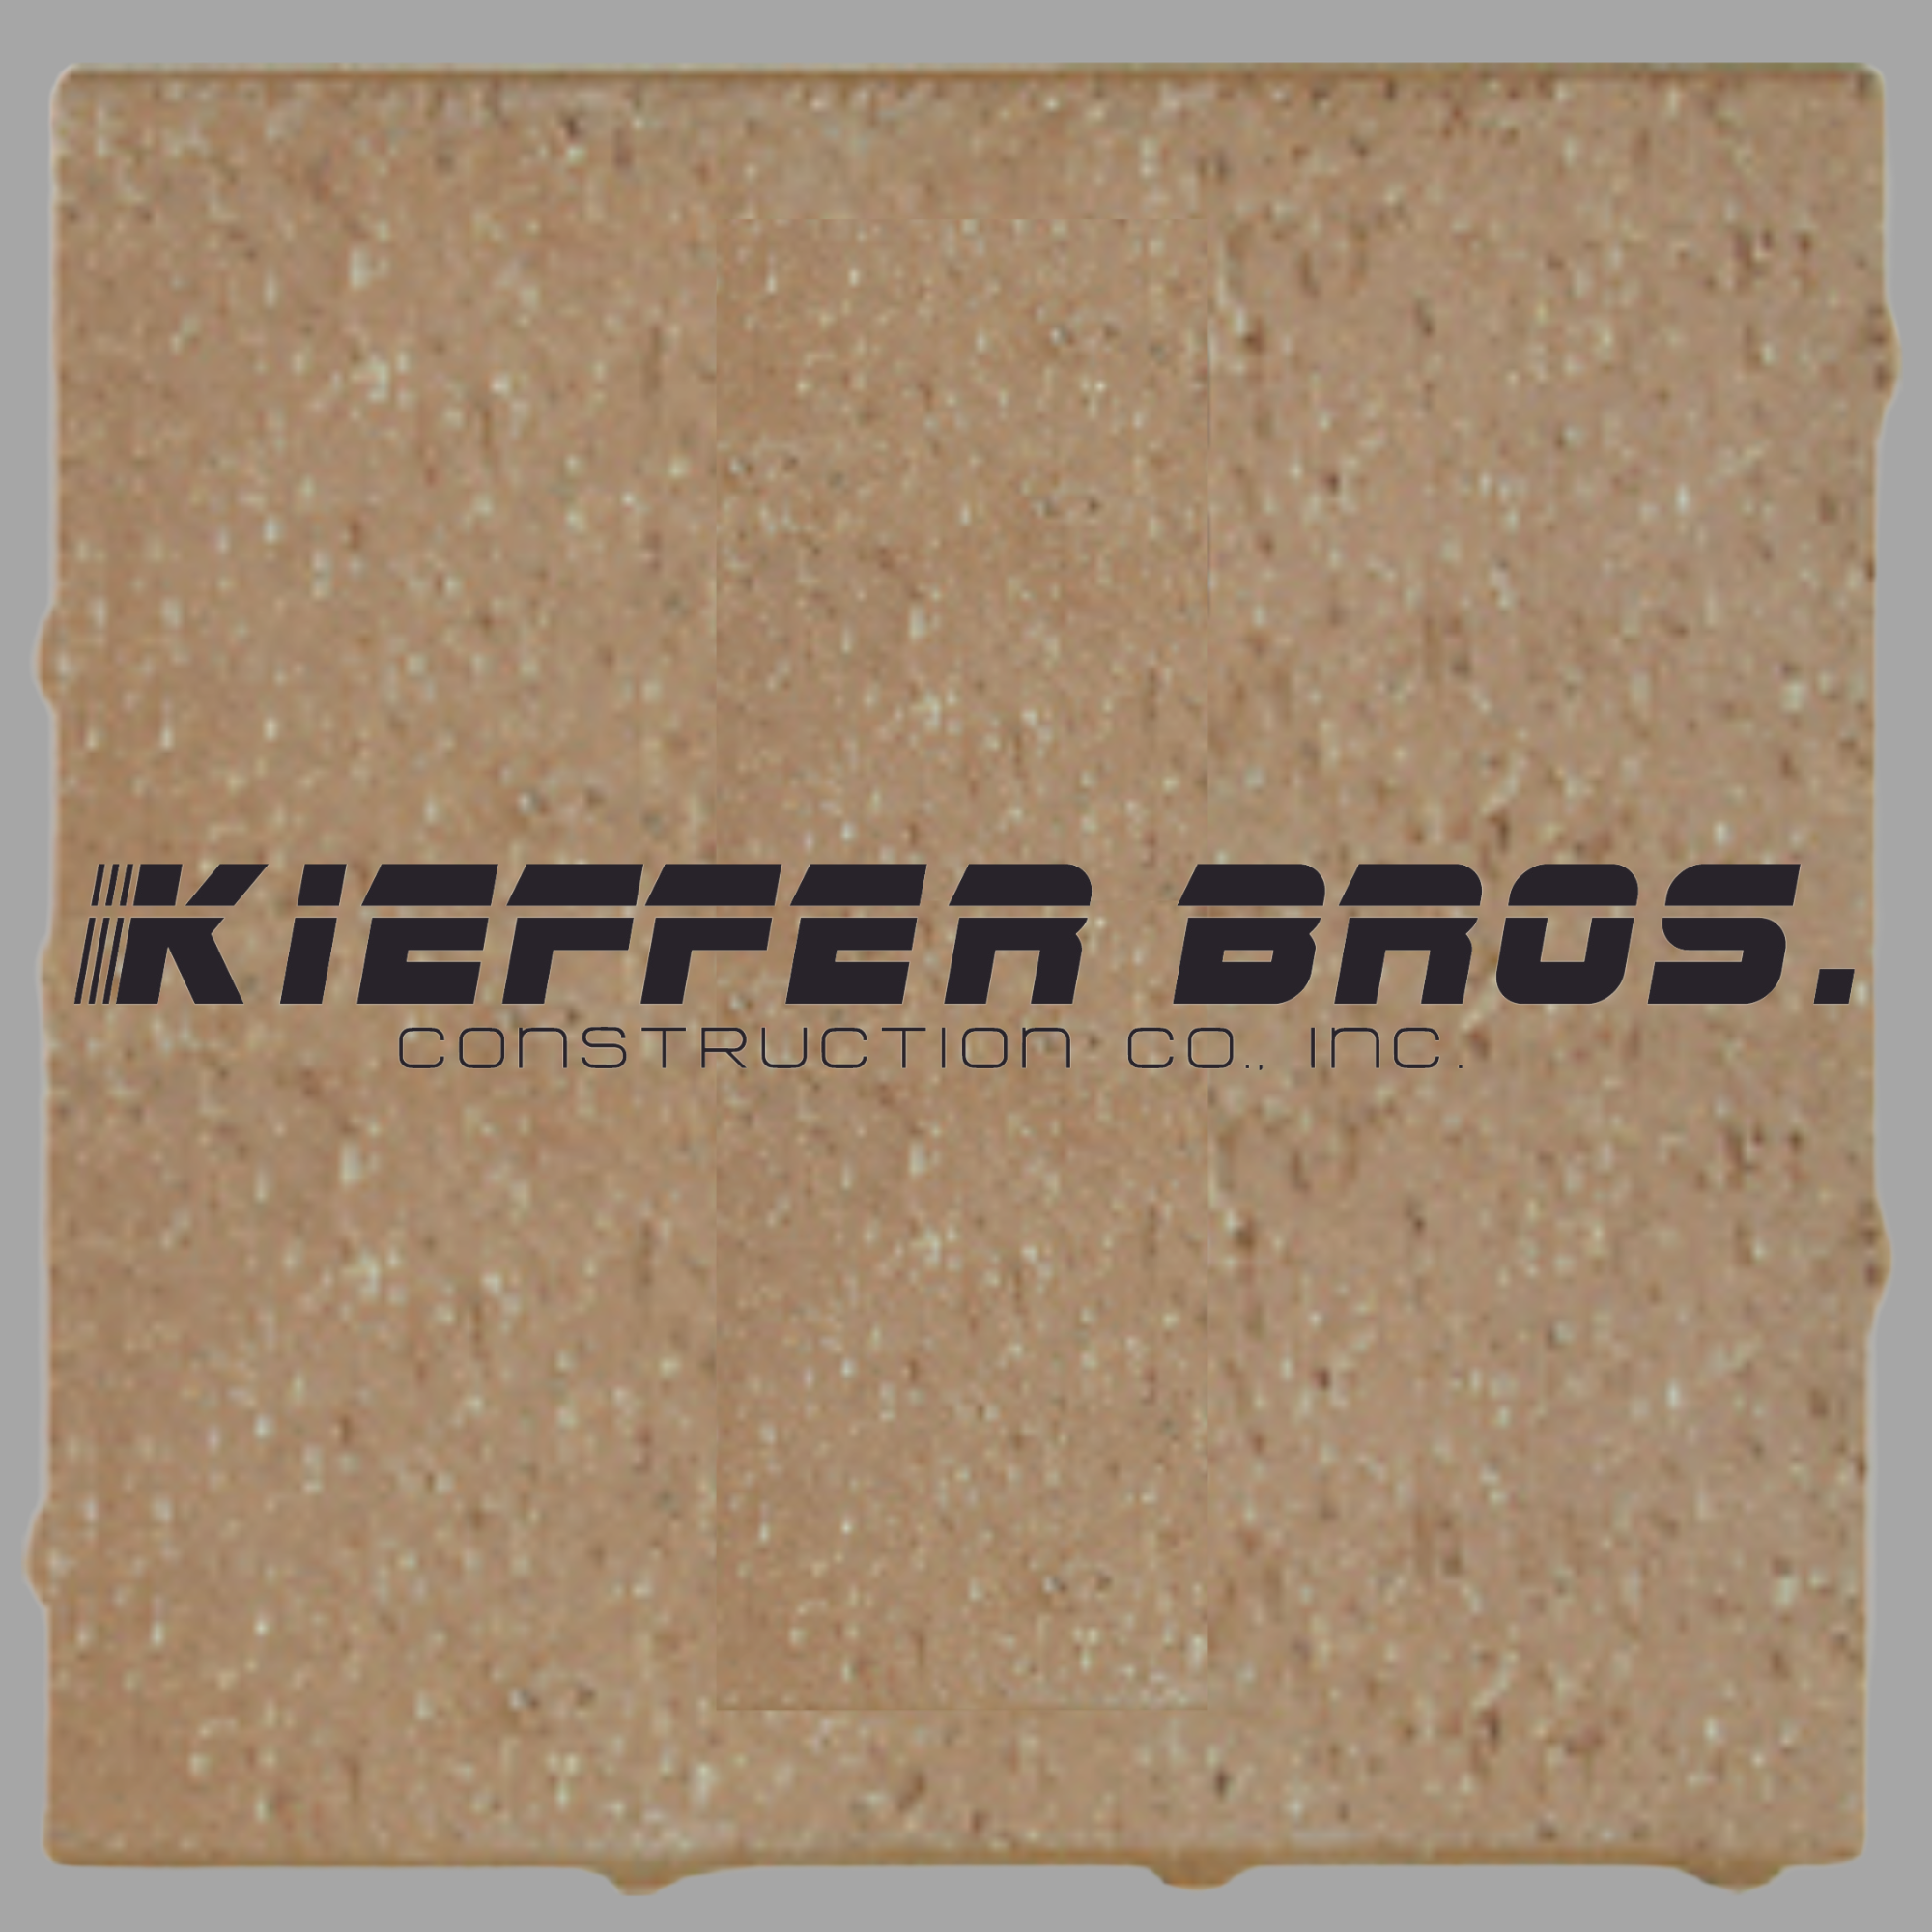 Kieffer Bros